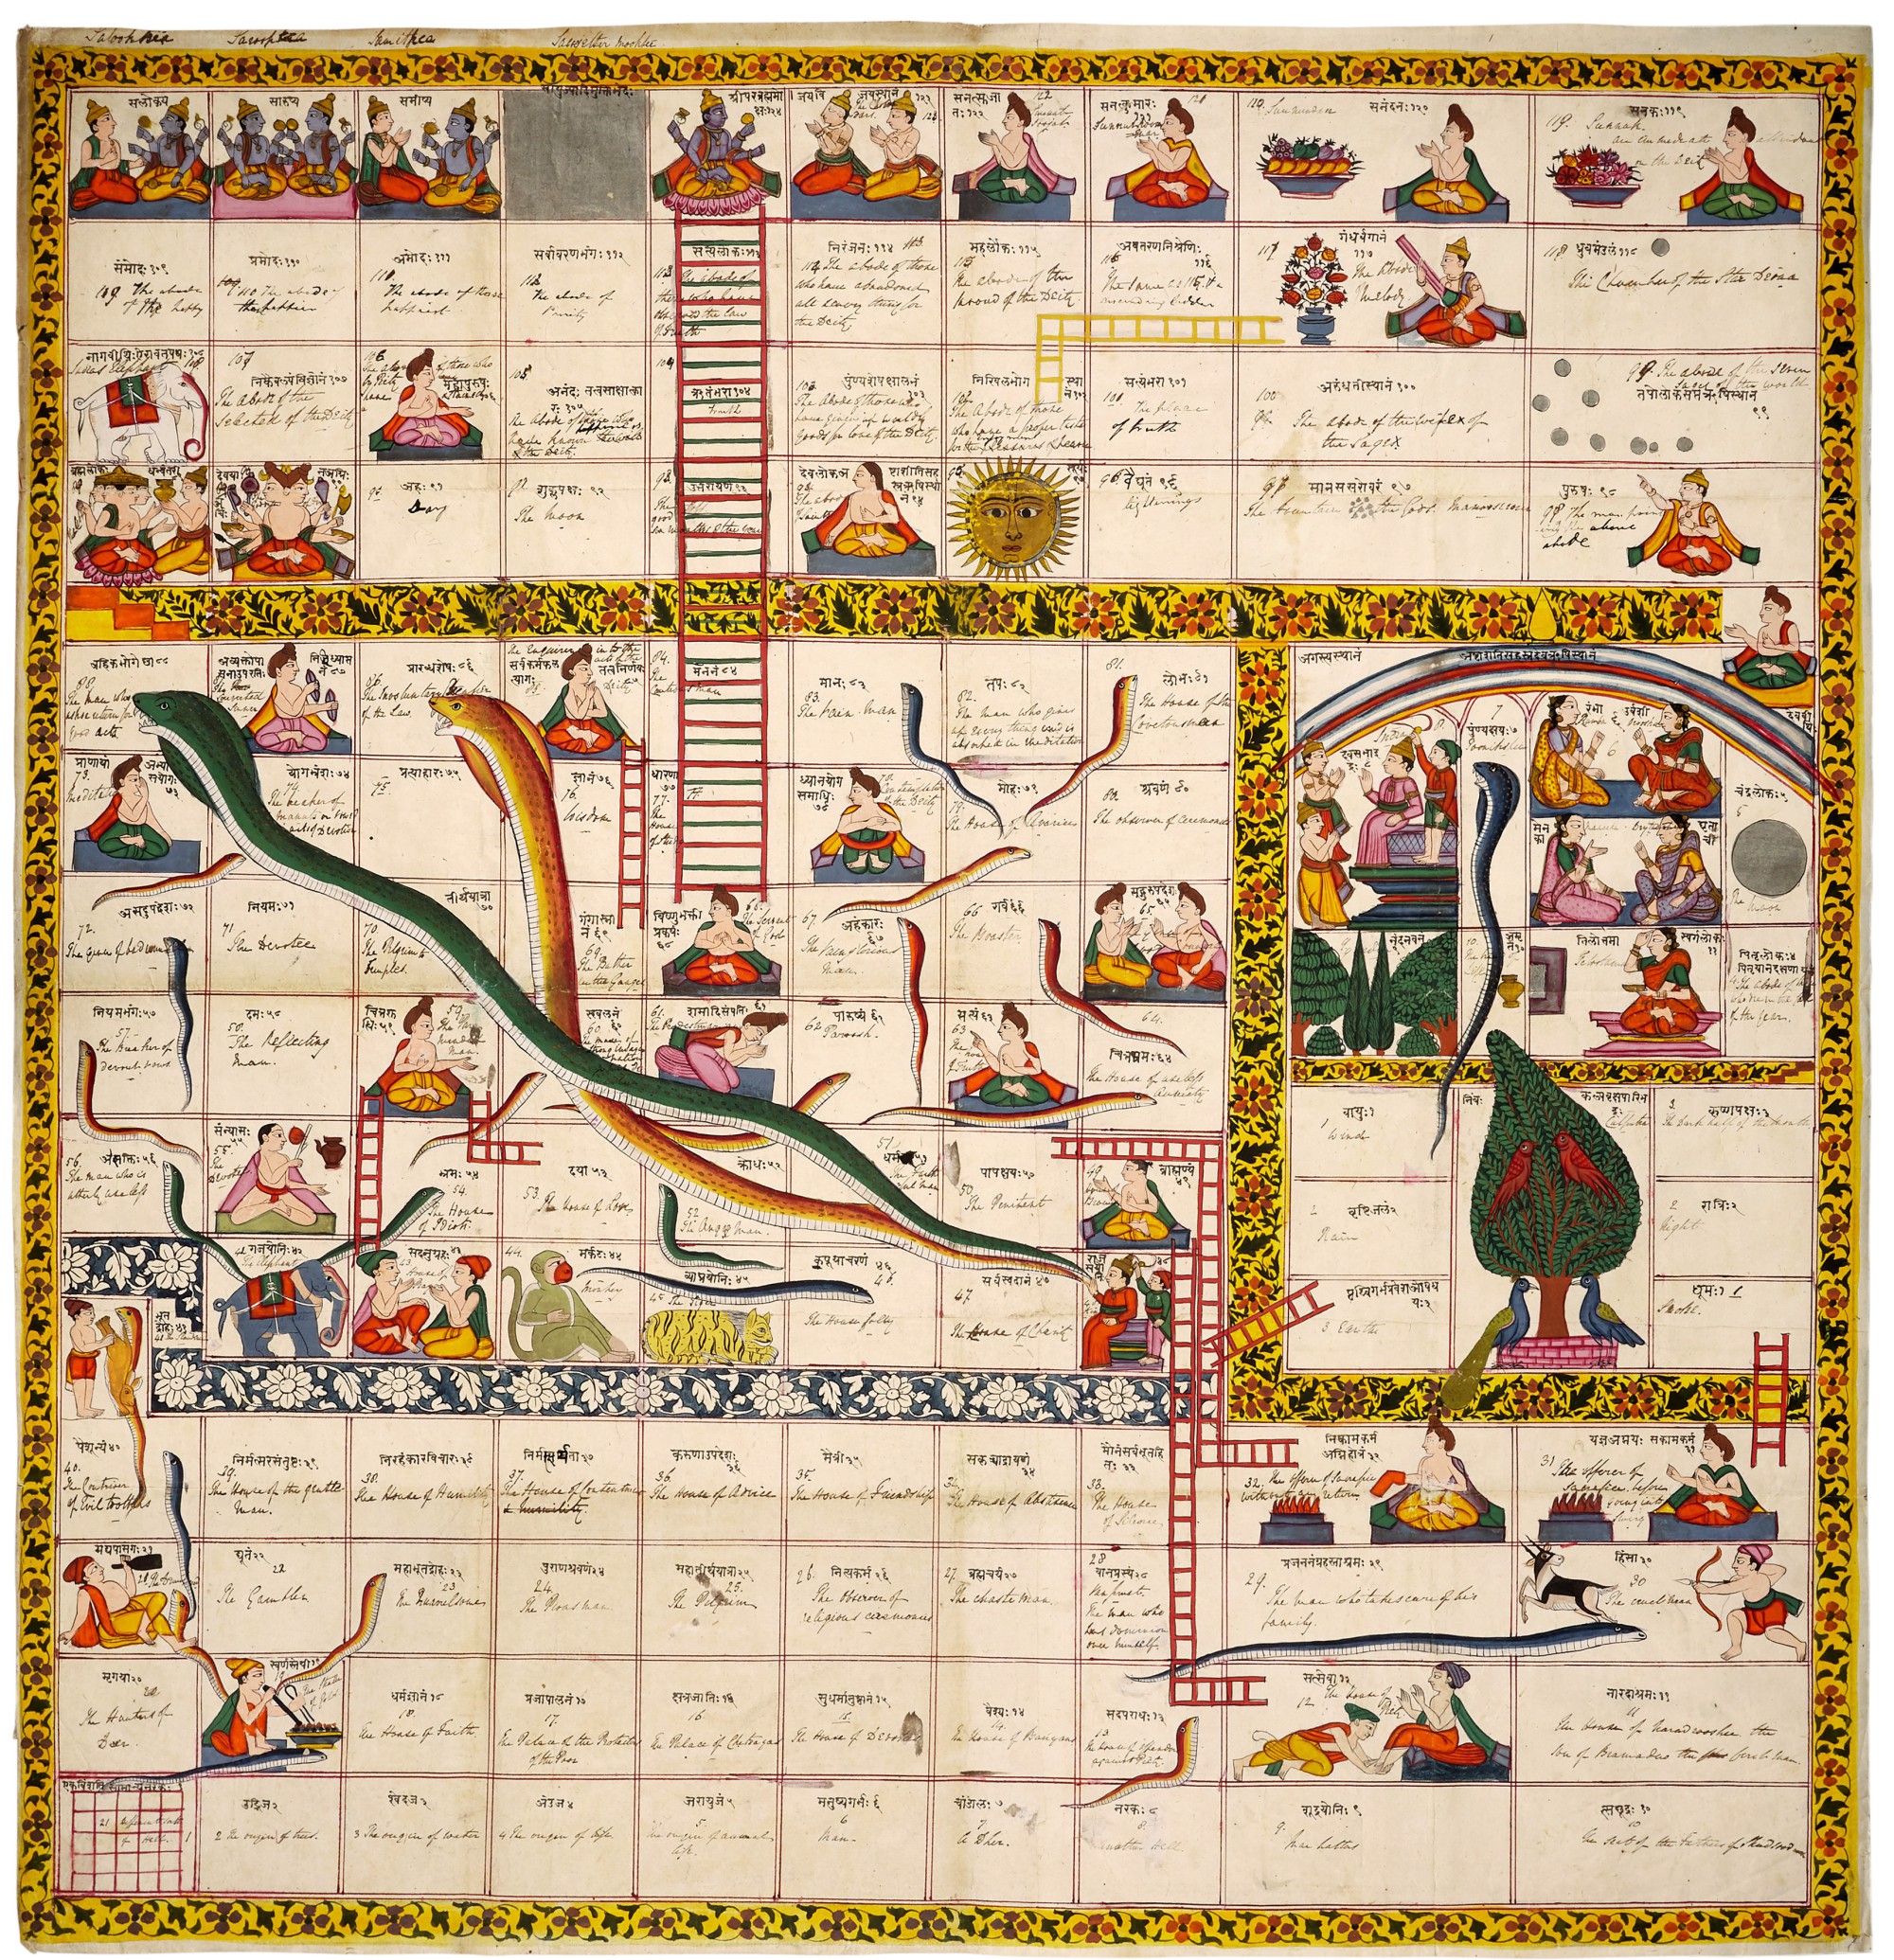 Rare Old Game of Snakes and Ladders (Moksha Patam), Nagpur, Maharashtra, India (1800)